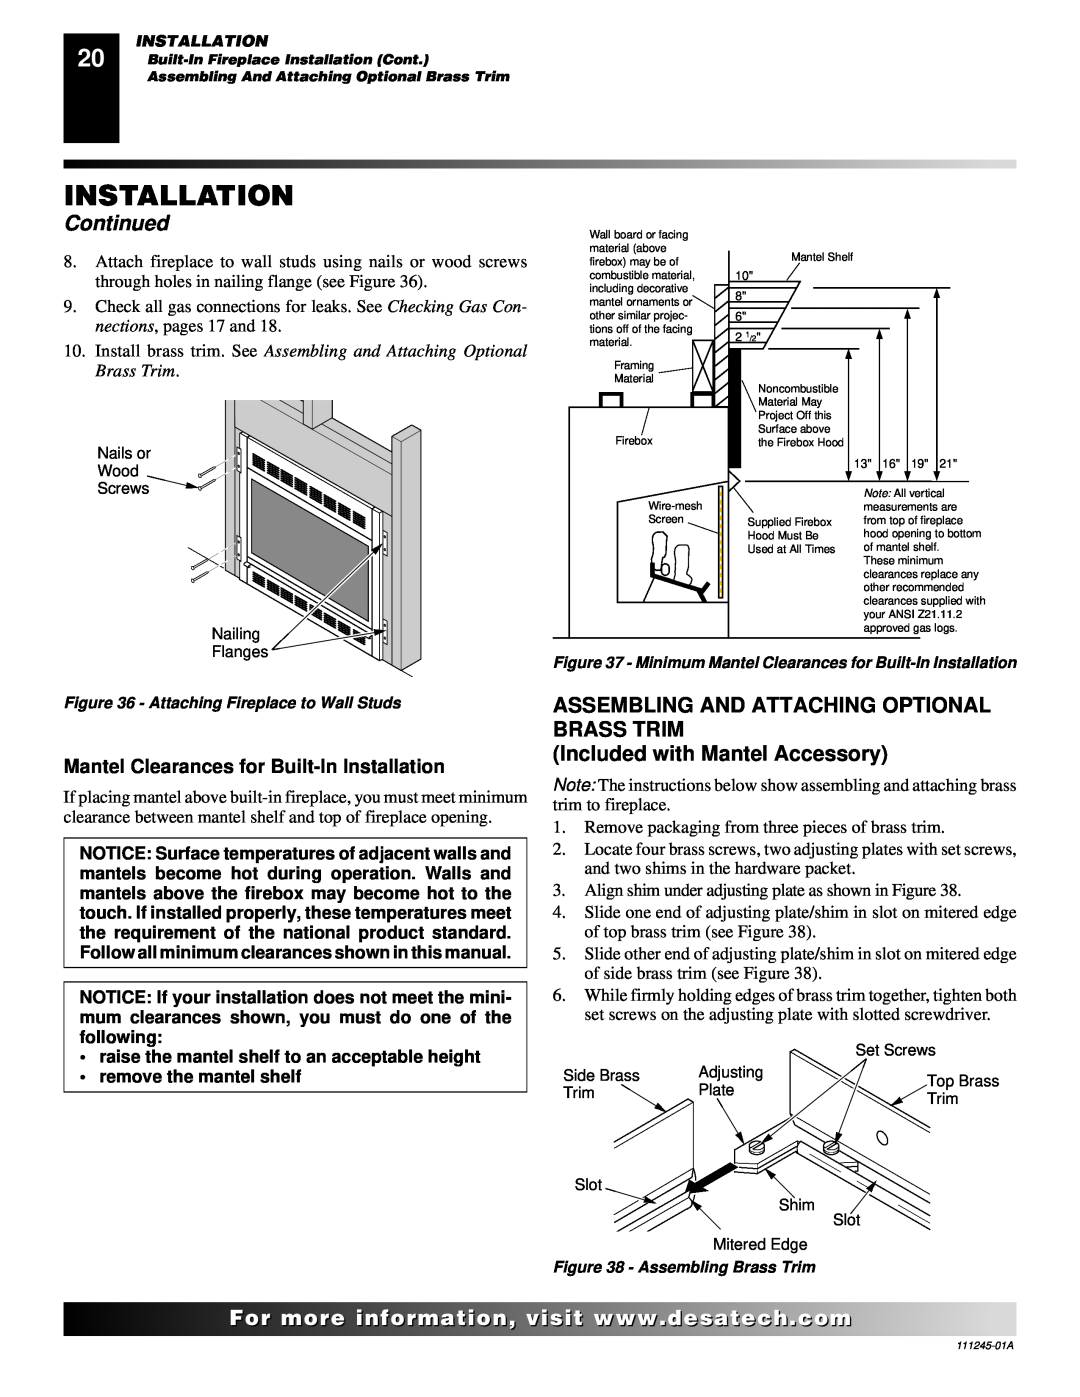 Desa CGEFP33PRB, CGEFP33NRB installation manual Continued, Mantel Clearances for Built-InInstallation, Brass Trim 